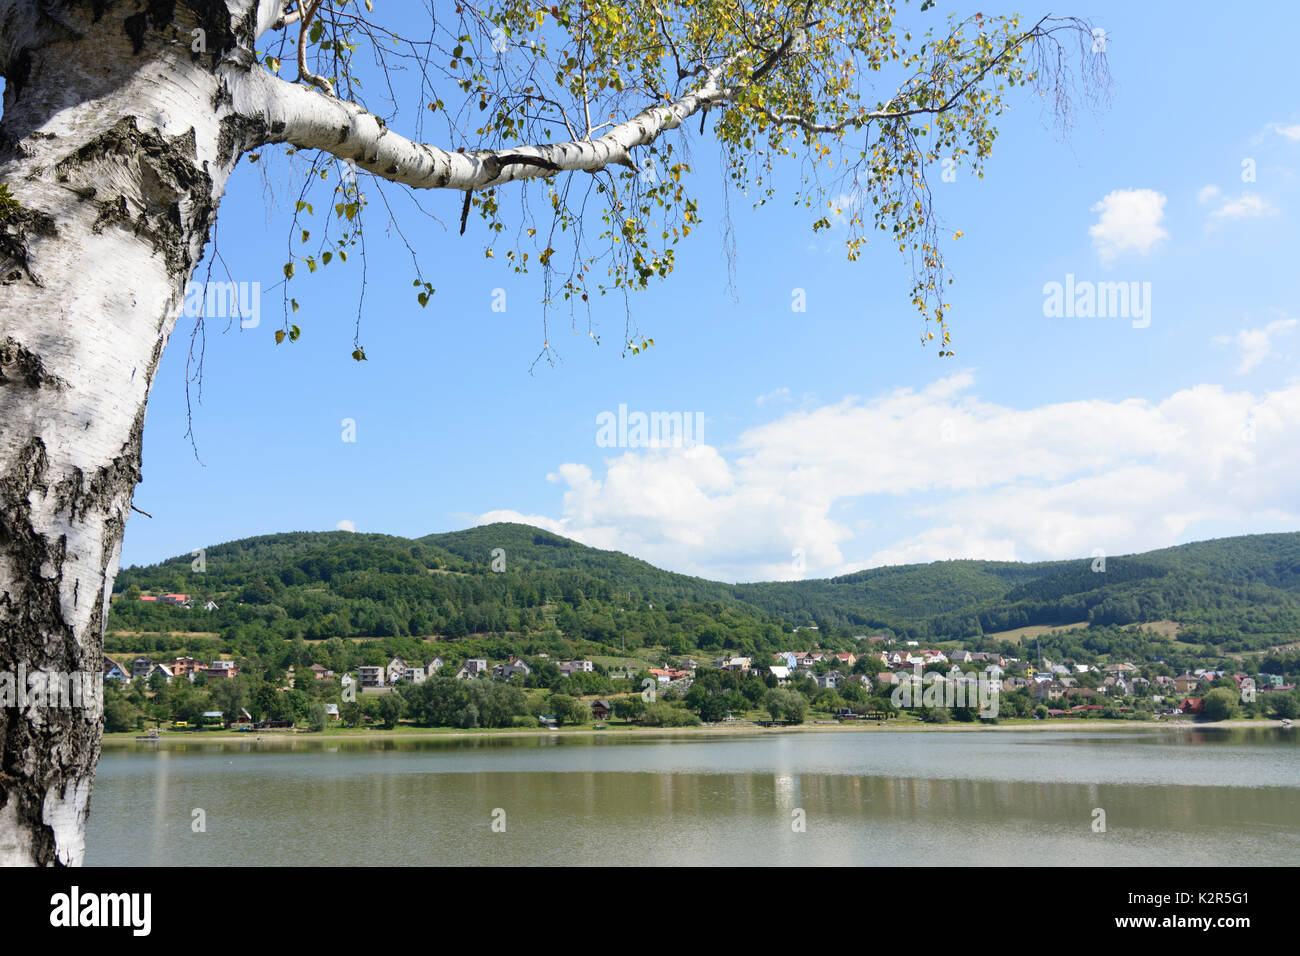 Nosice Reservoir of Vah river, Nosice, Slovakia Stock Photo